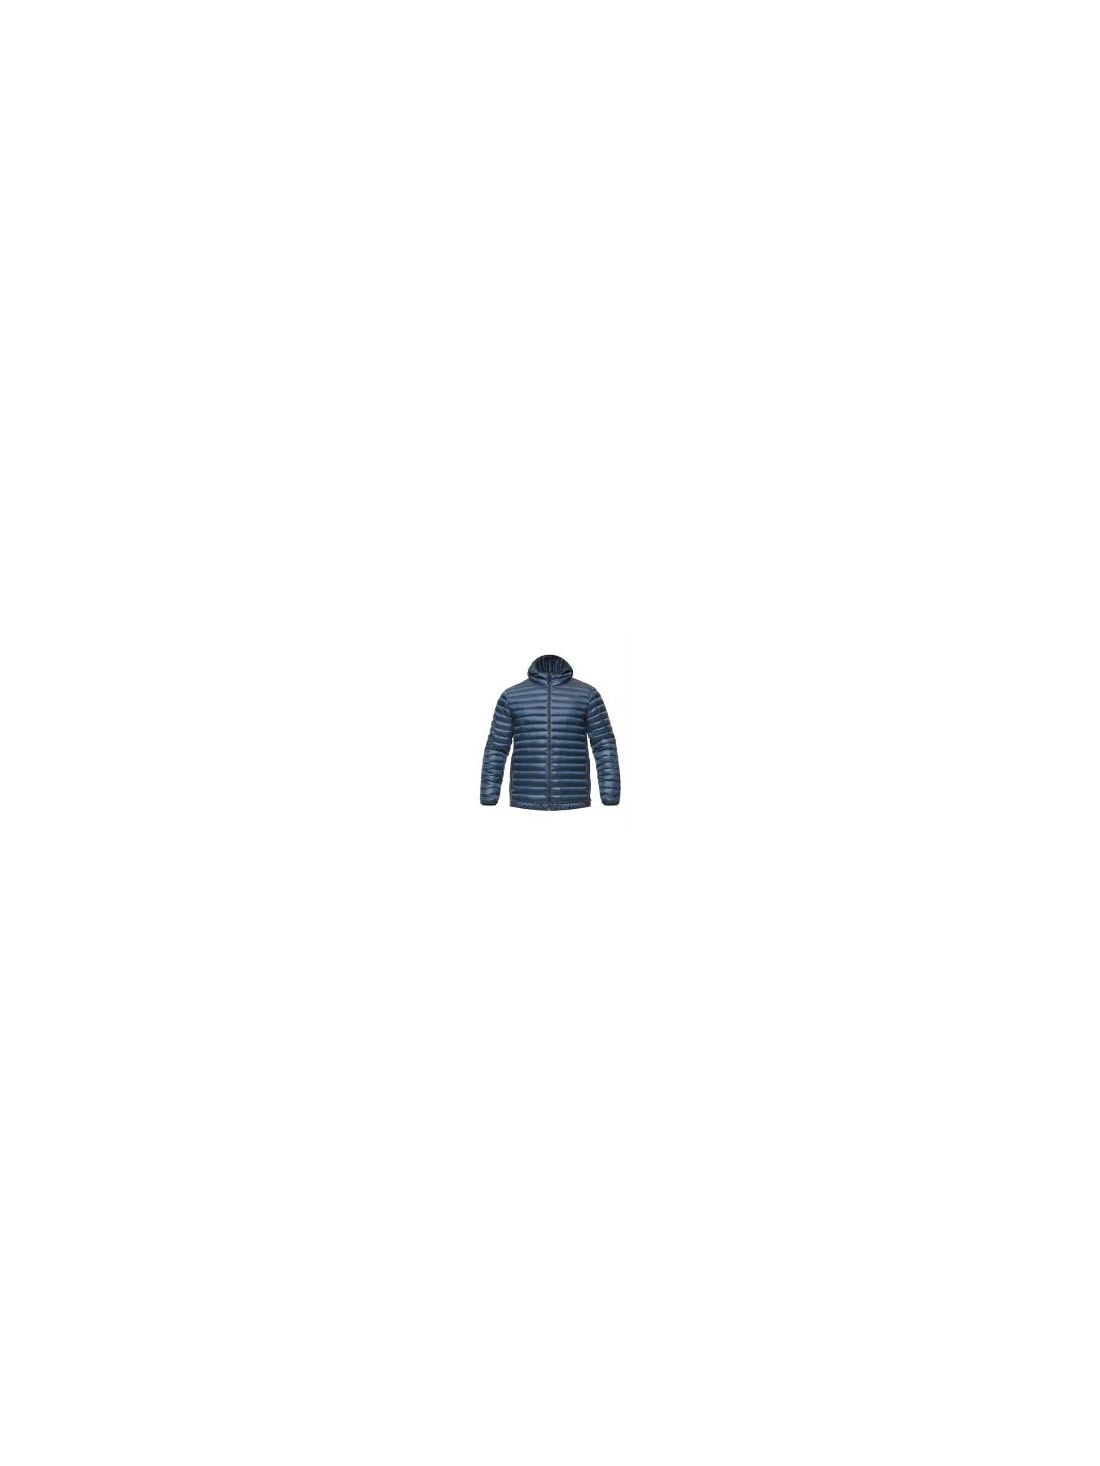 Ультралегкая пуховая куртка Bask Chamonix Light MJ V2